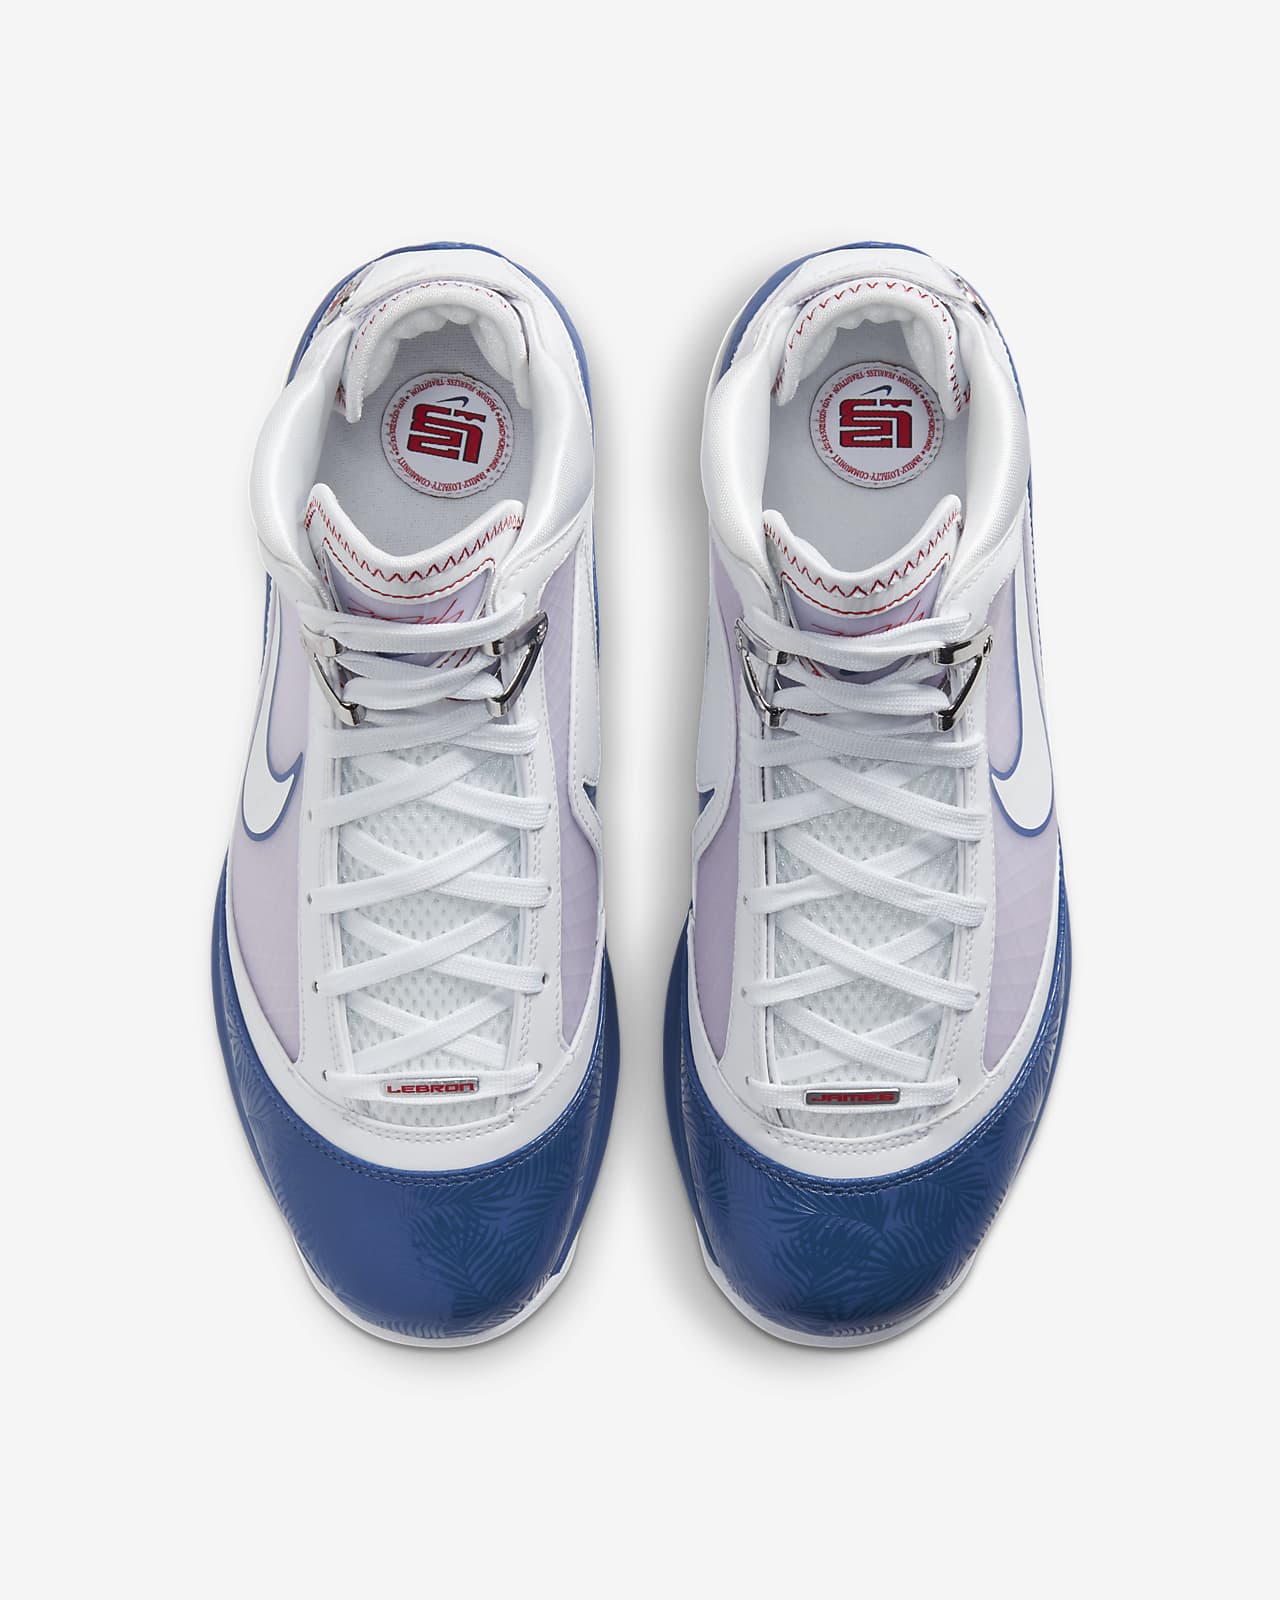 Chaussure LeBron 7 « Baseball Blue » pour Homme